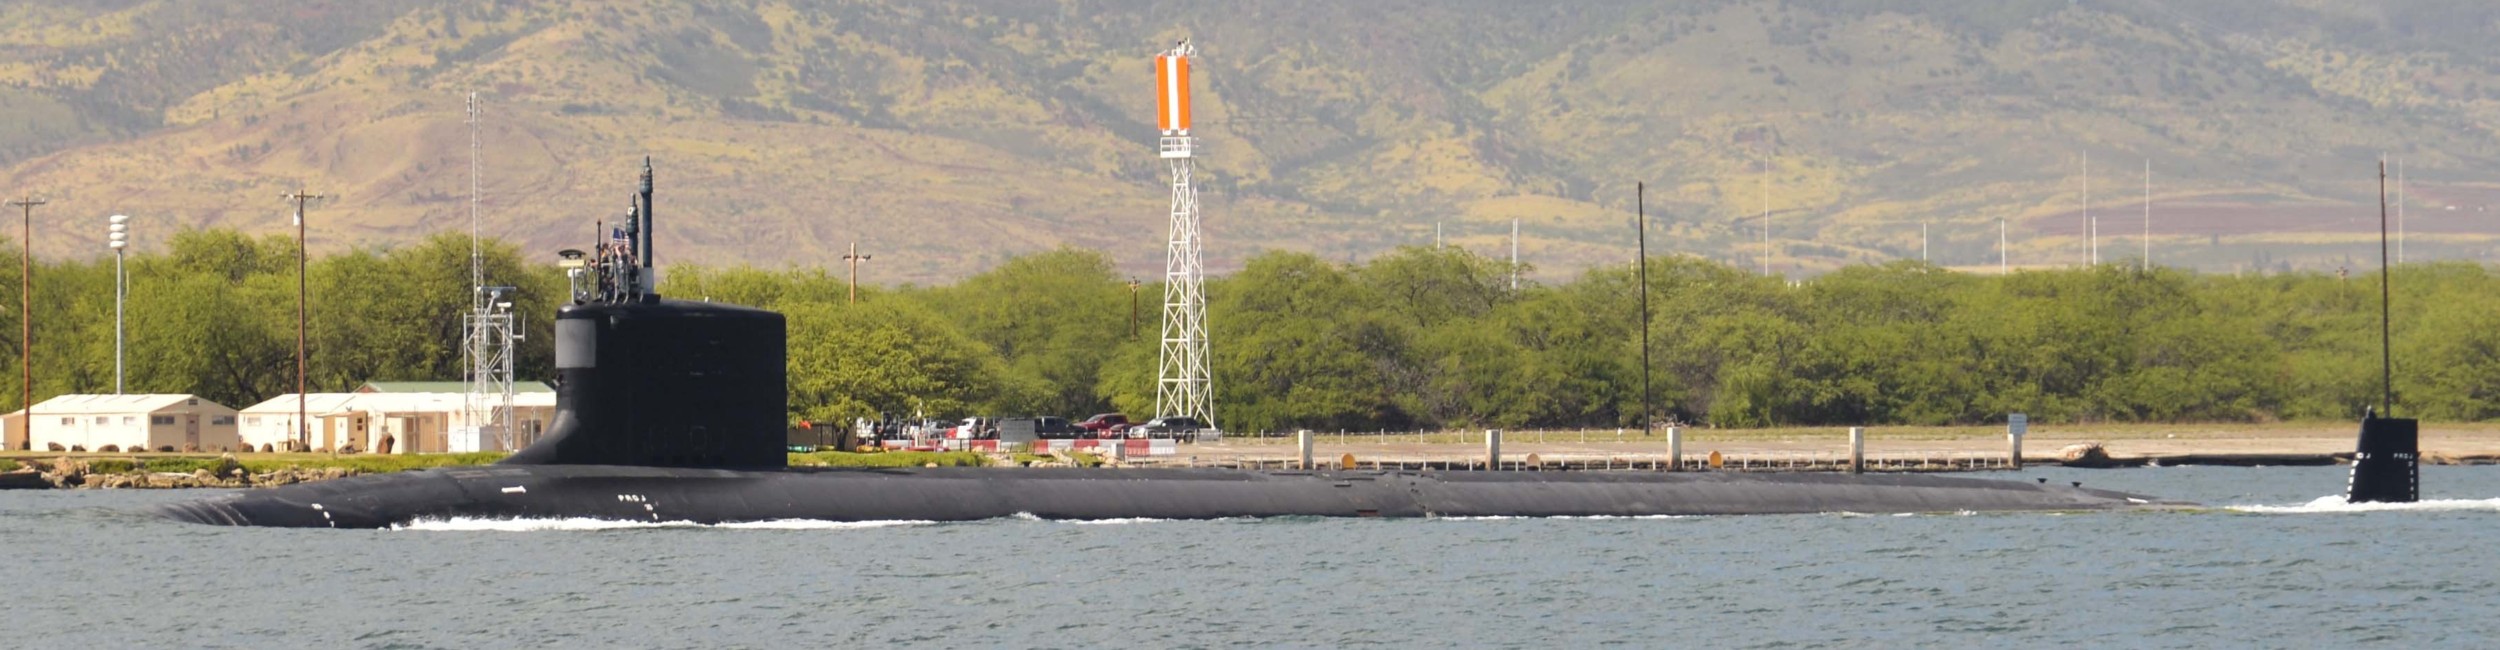 ssn-782 uss mississippi virginia class attack submarine us navy 34